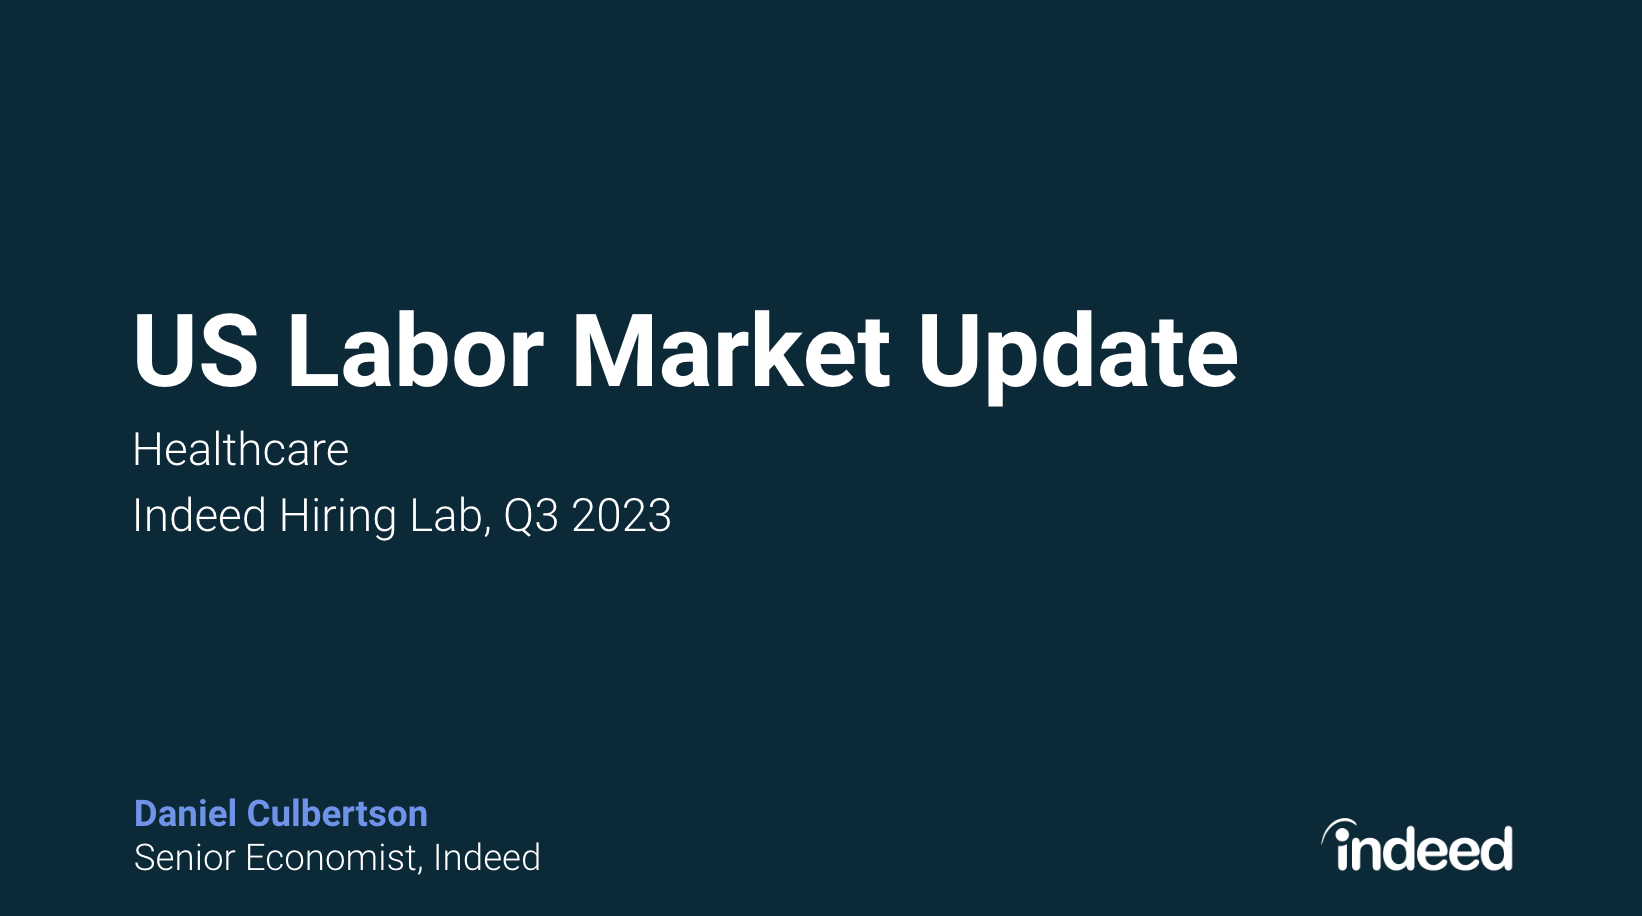 US Labor Market Update Healthcare Q3 2023